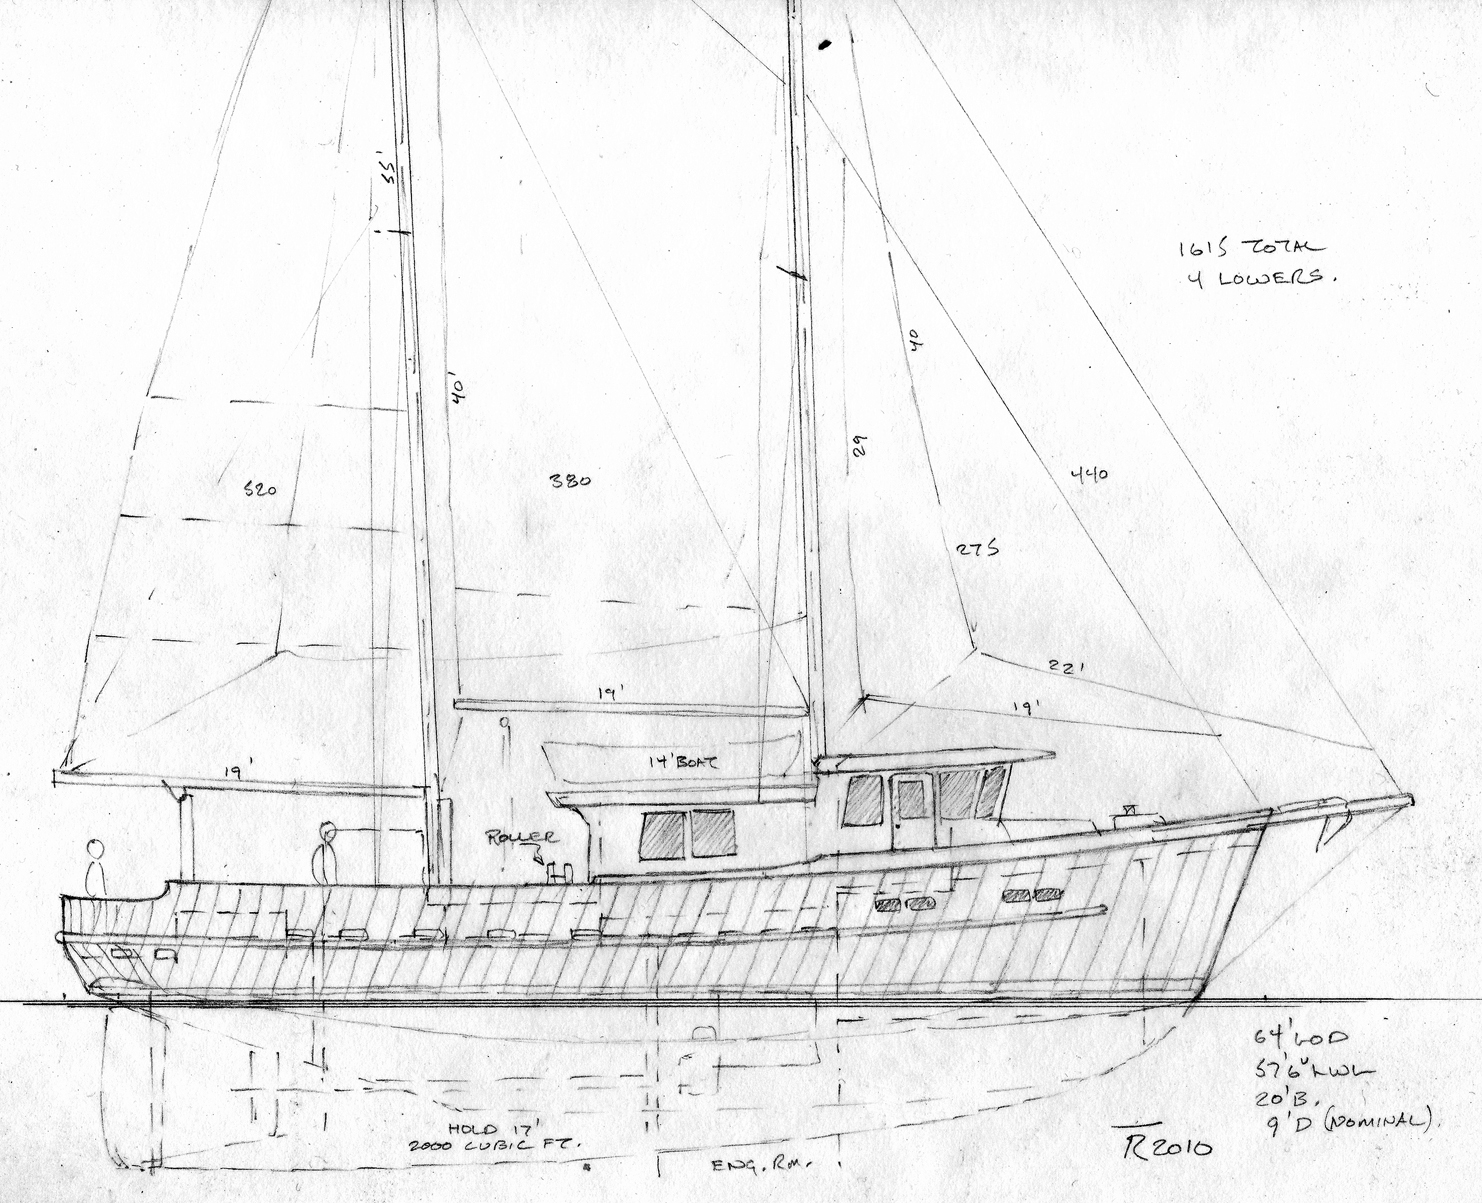 64’ troller fishing schooner ~ sail boat designs by tad